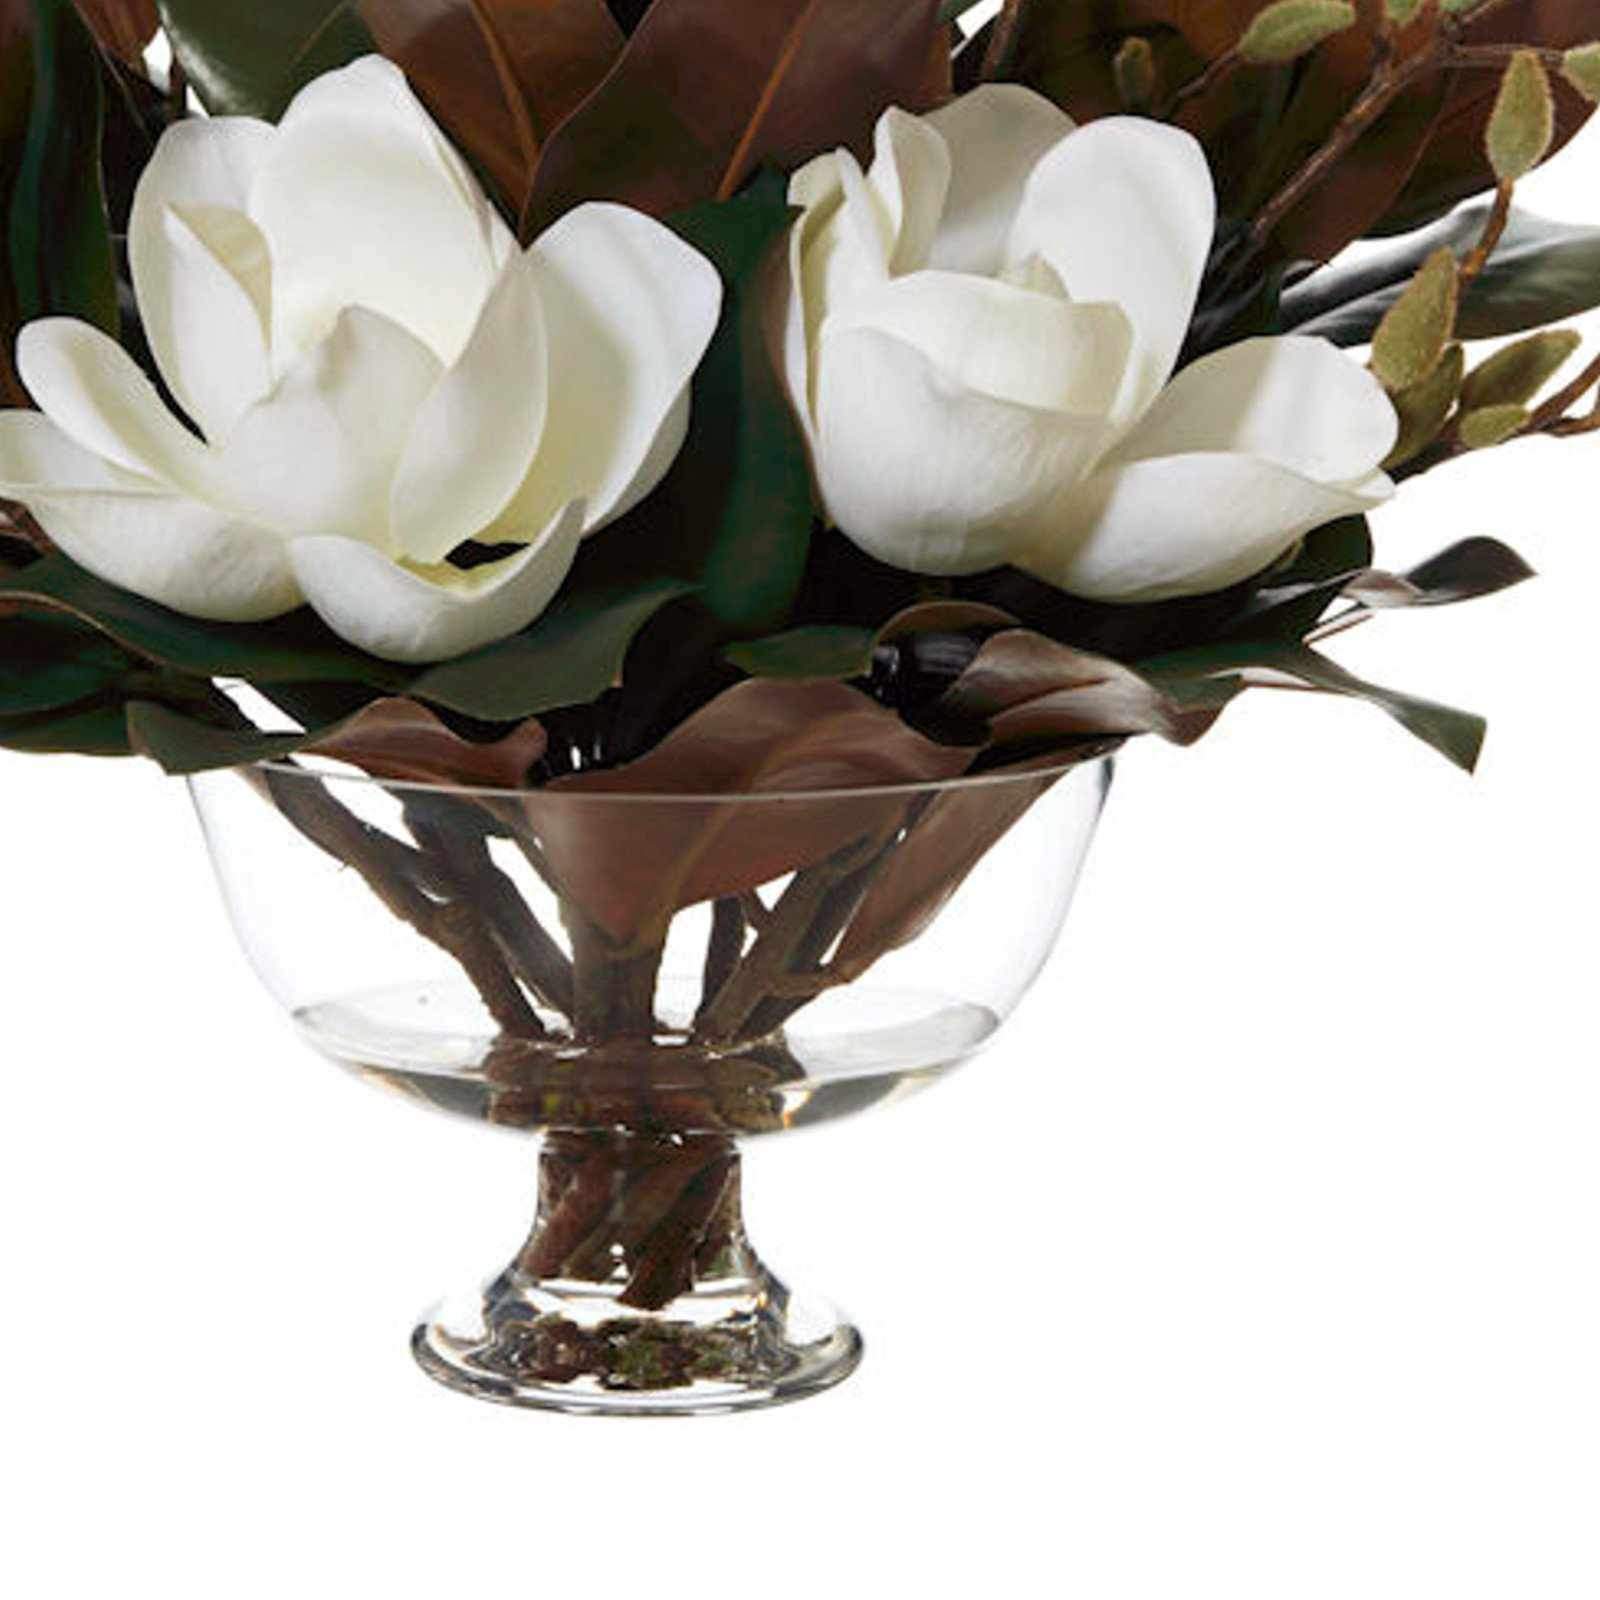 Magnolia Mix with Dahlia Bowl - Artificial Flower Arrangement-artificial flowers and plants-Chef's Quality Cookware